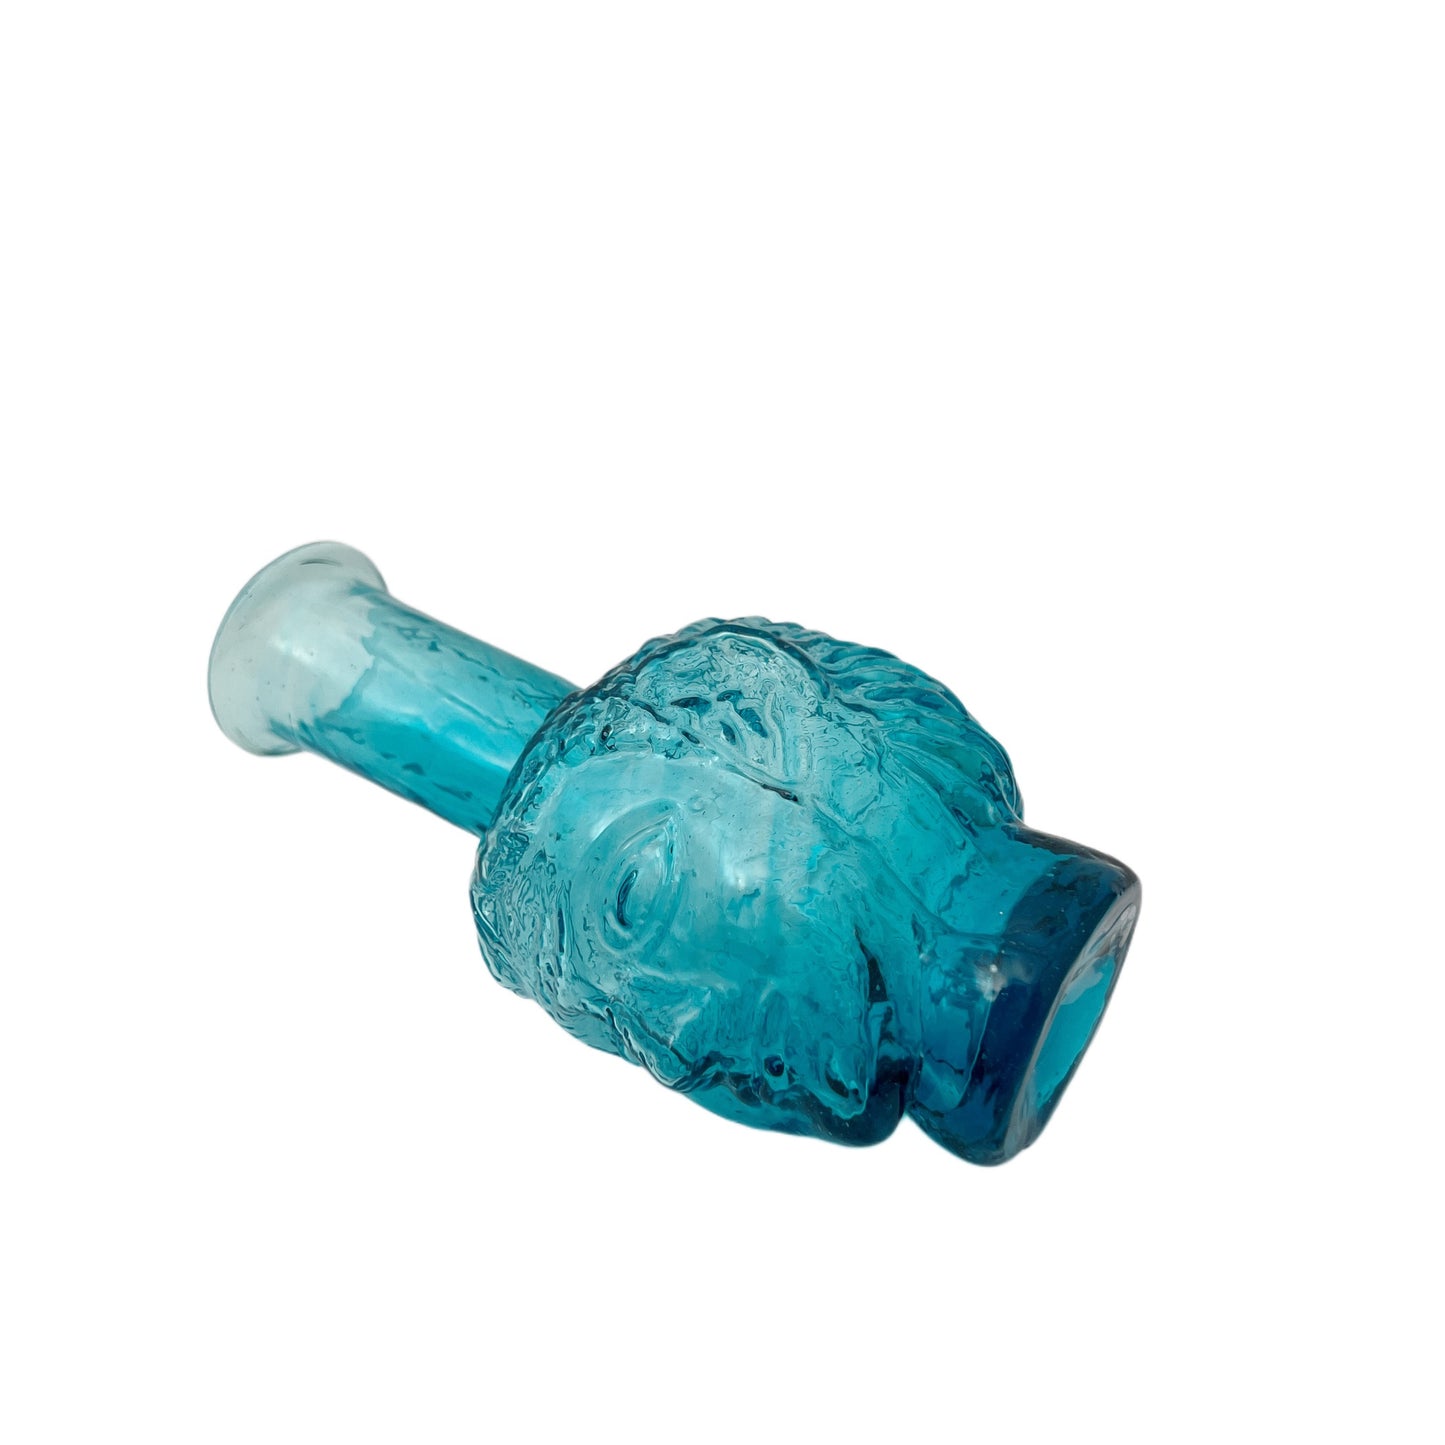 【La Soufflerie】フラワーベース Vase Tete Turquoise